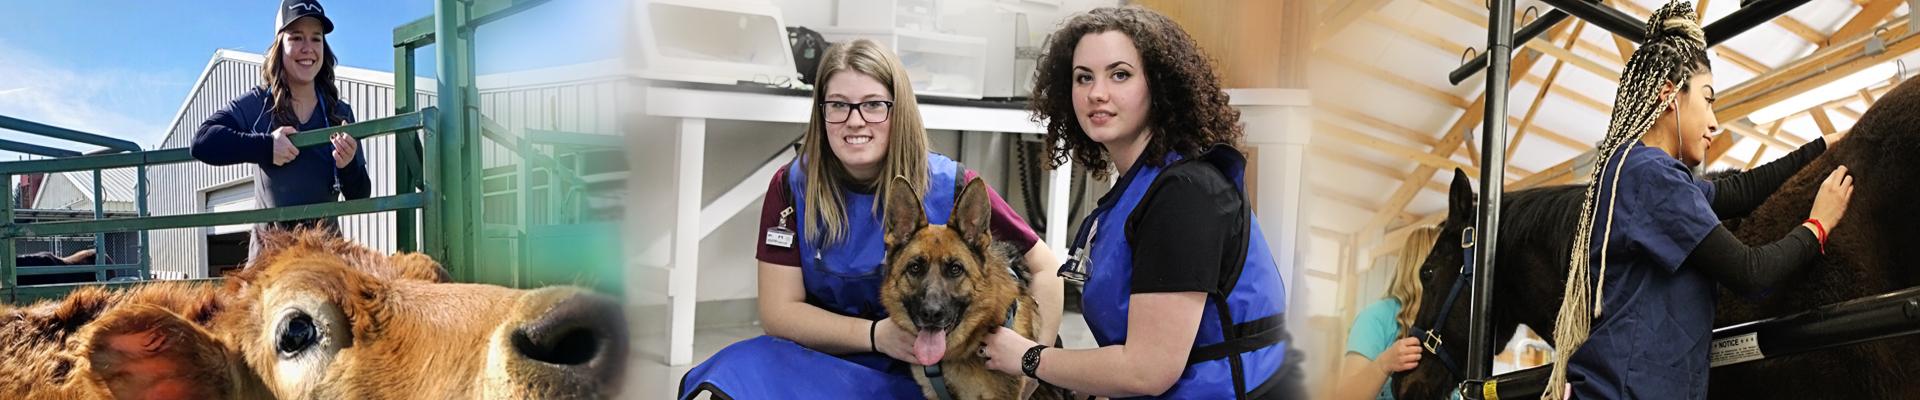 multiple skills learned in veterinary technology